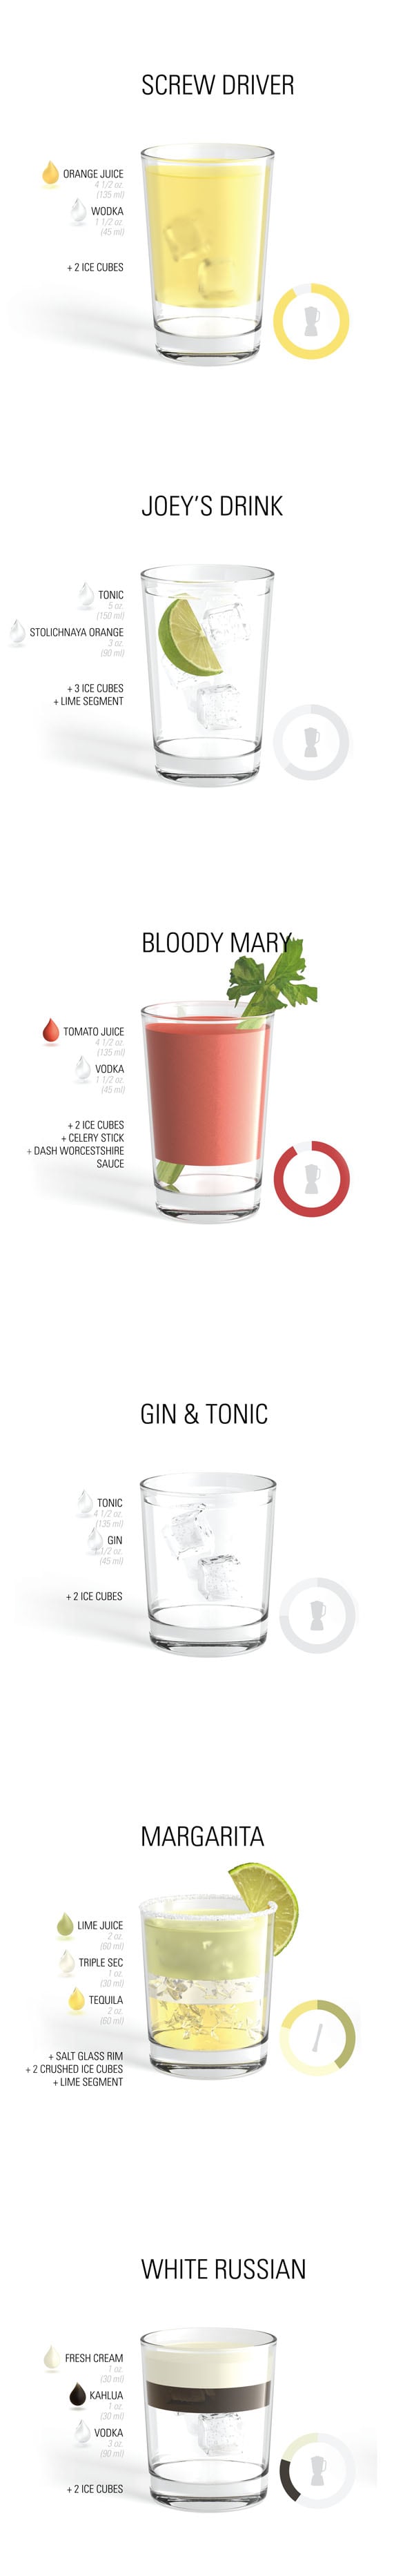 konstantin-datz-cocktail-poster-111.jpg